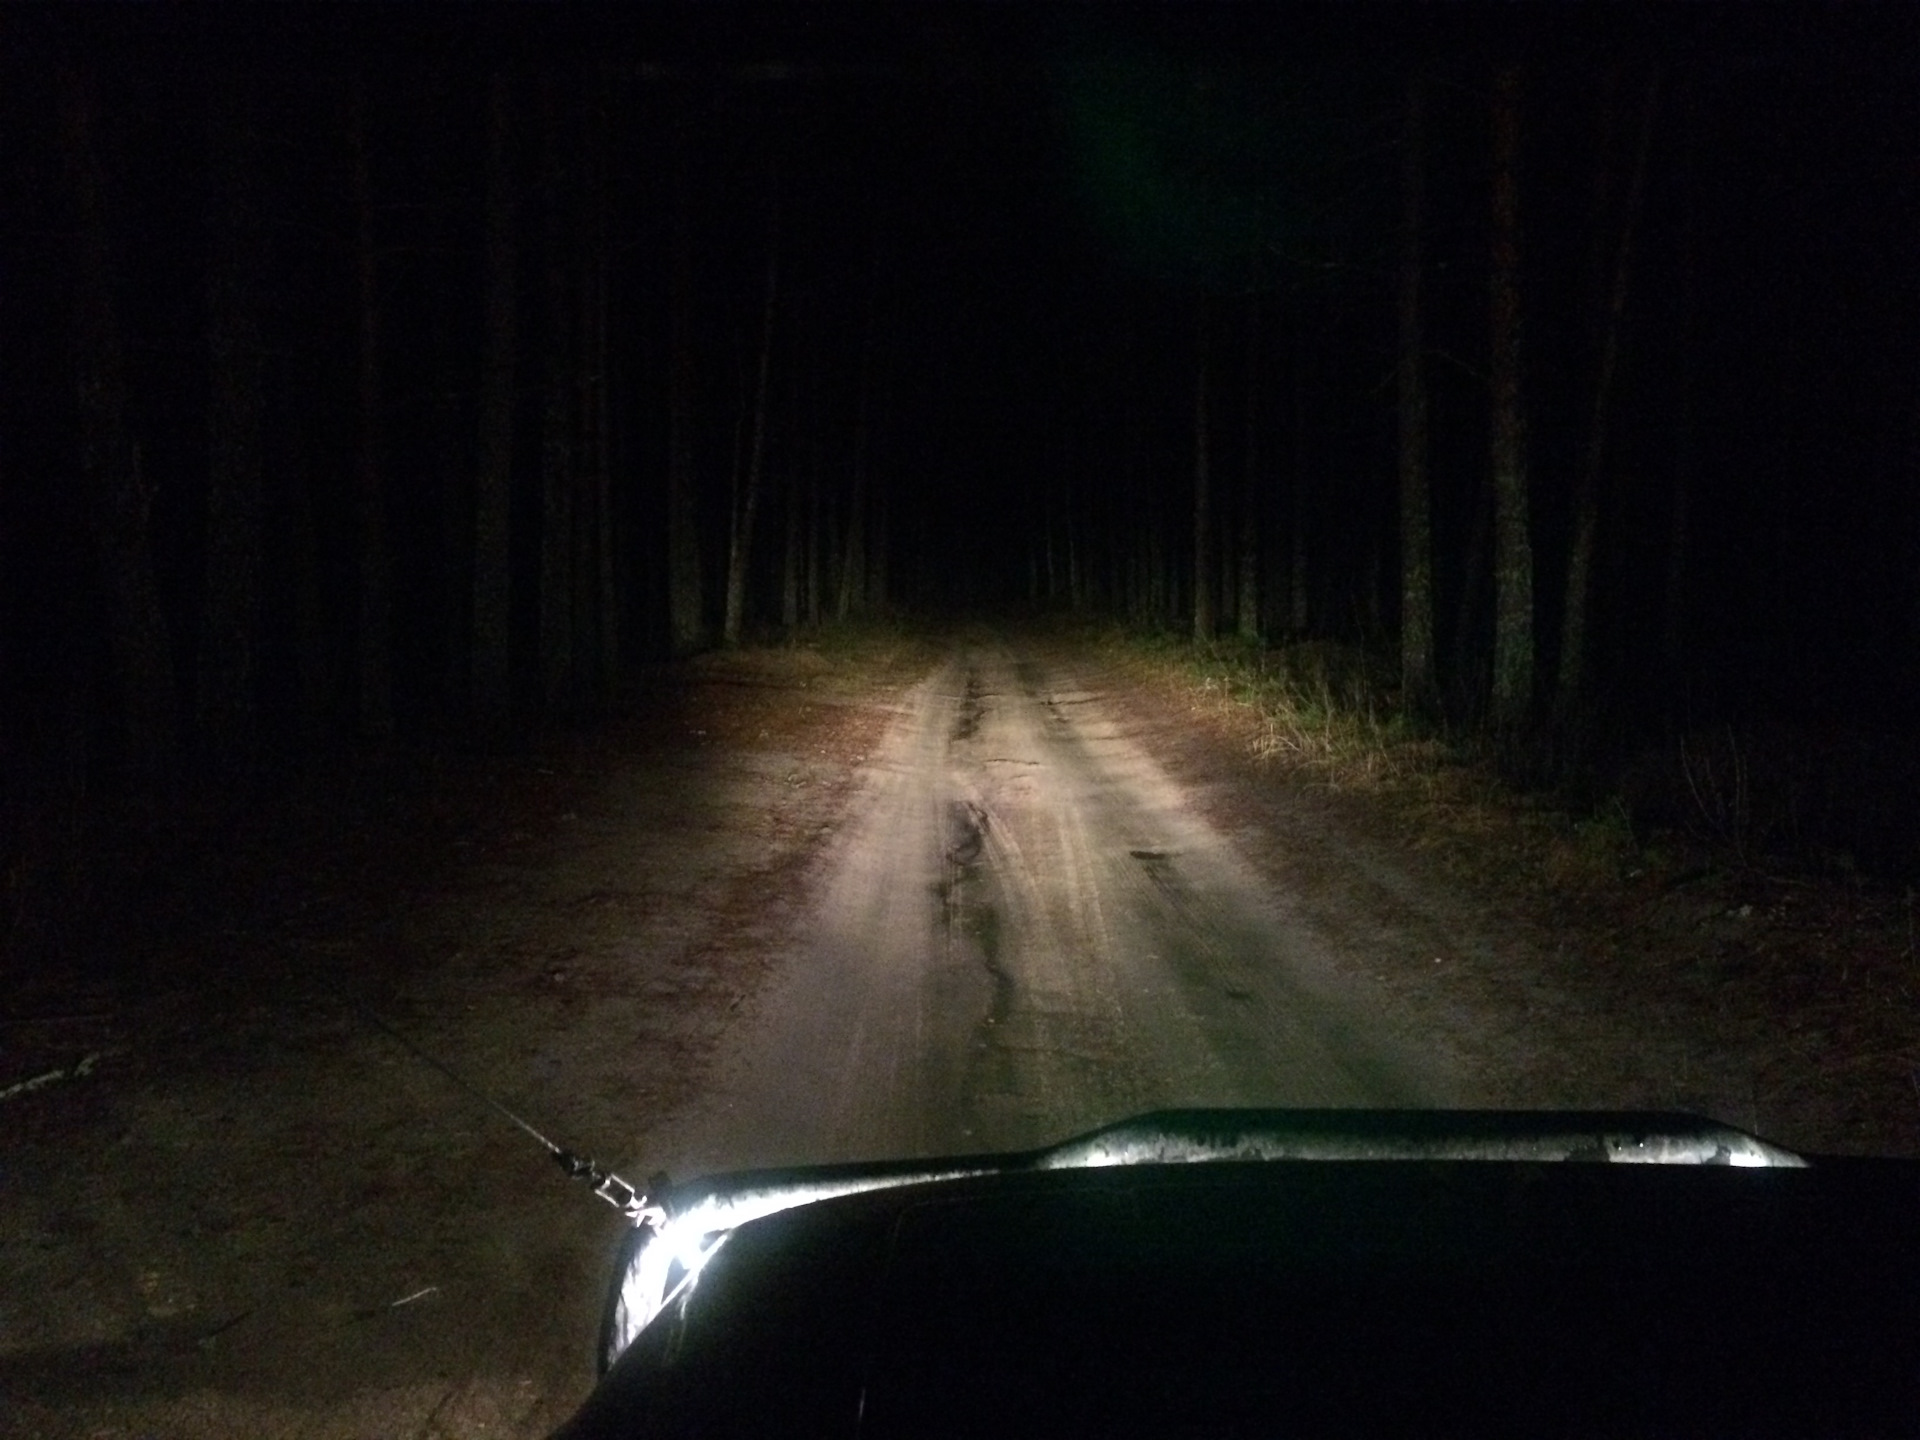 Фары фары лизогуб speed. Дорога ночью. Свет фар на дороге. Ночная дорога фары. Фары в лесу.